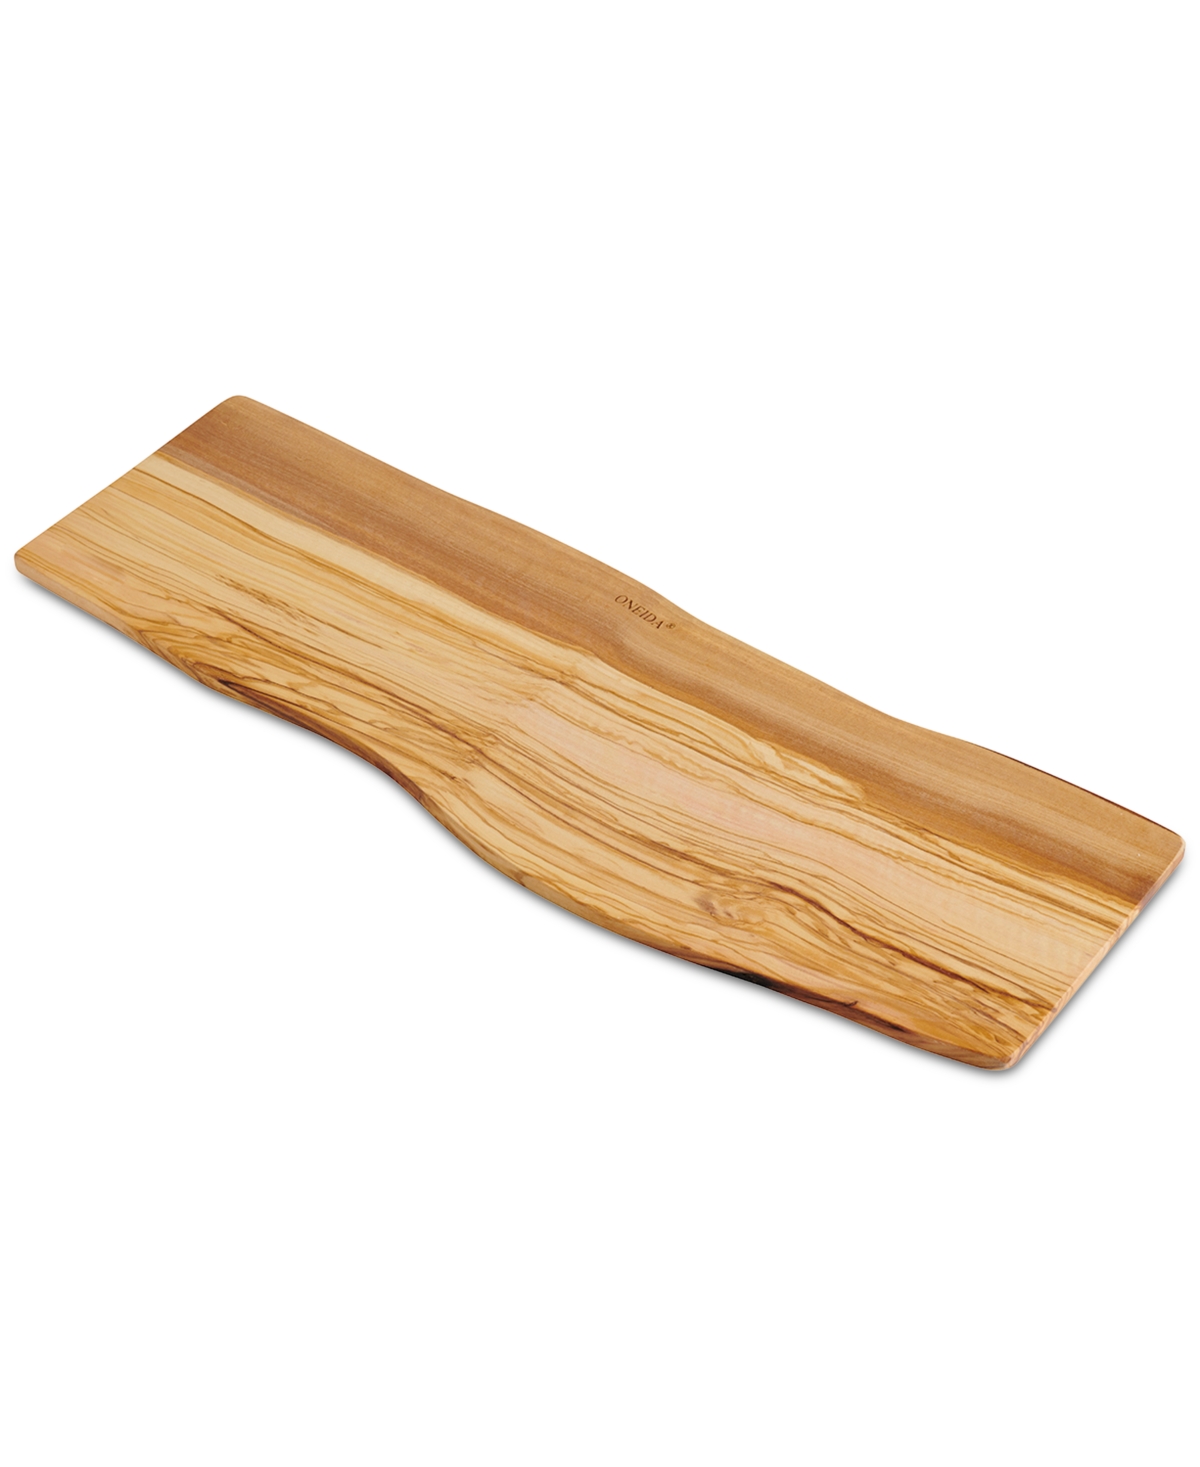 Oblong Large Olive Wood Board with Natural Bark Edges